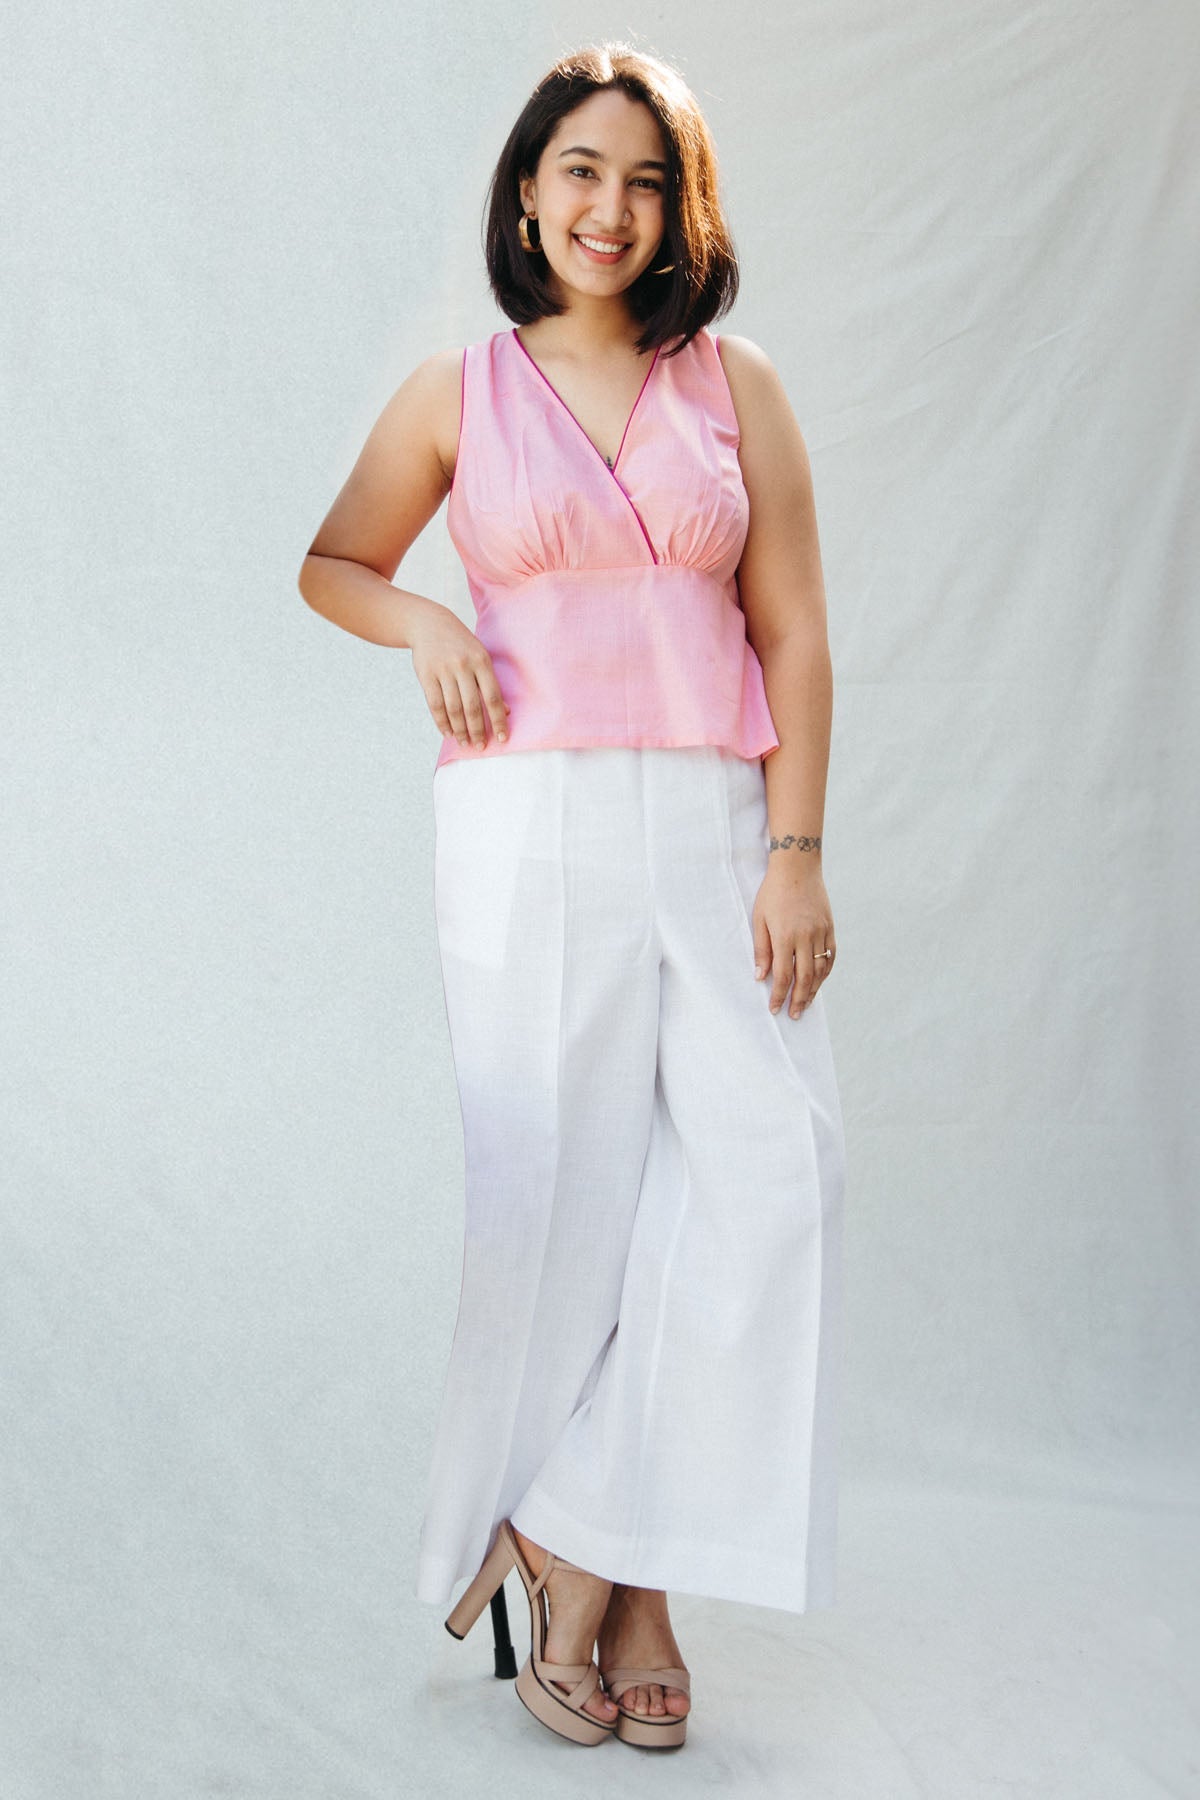 Chhaya Gandhi Cotton White Straight Pants for women online at ScrollnShops